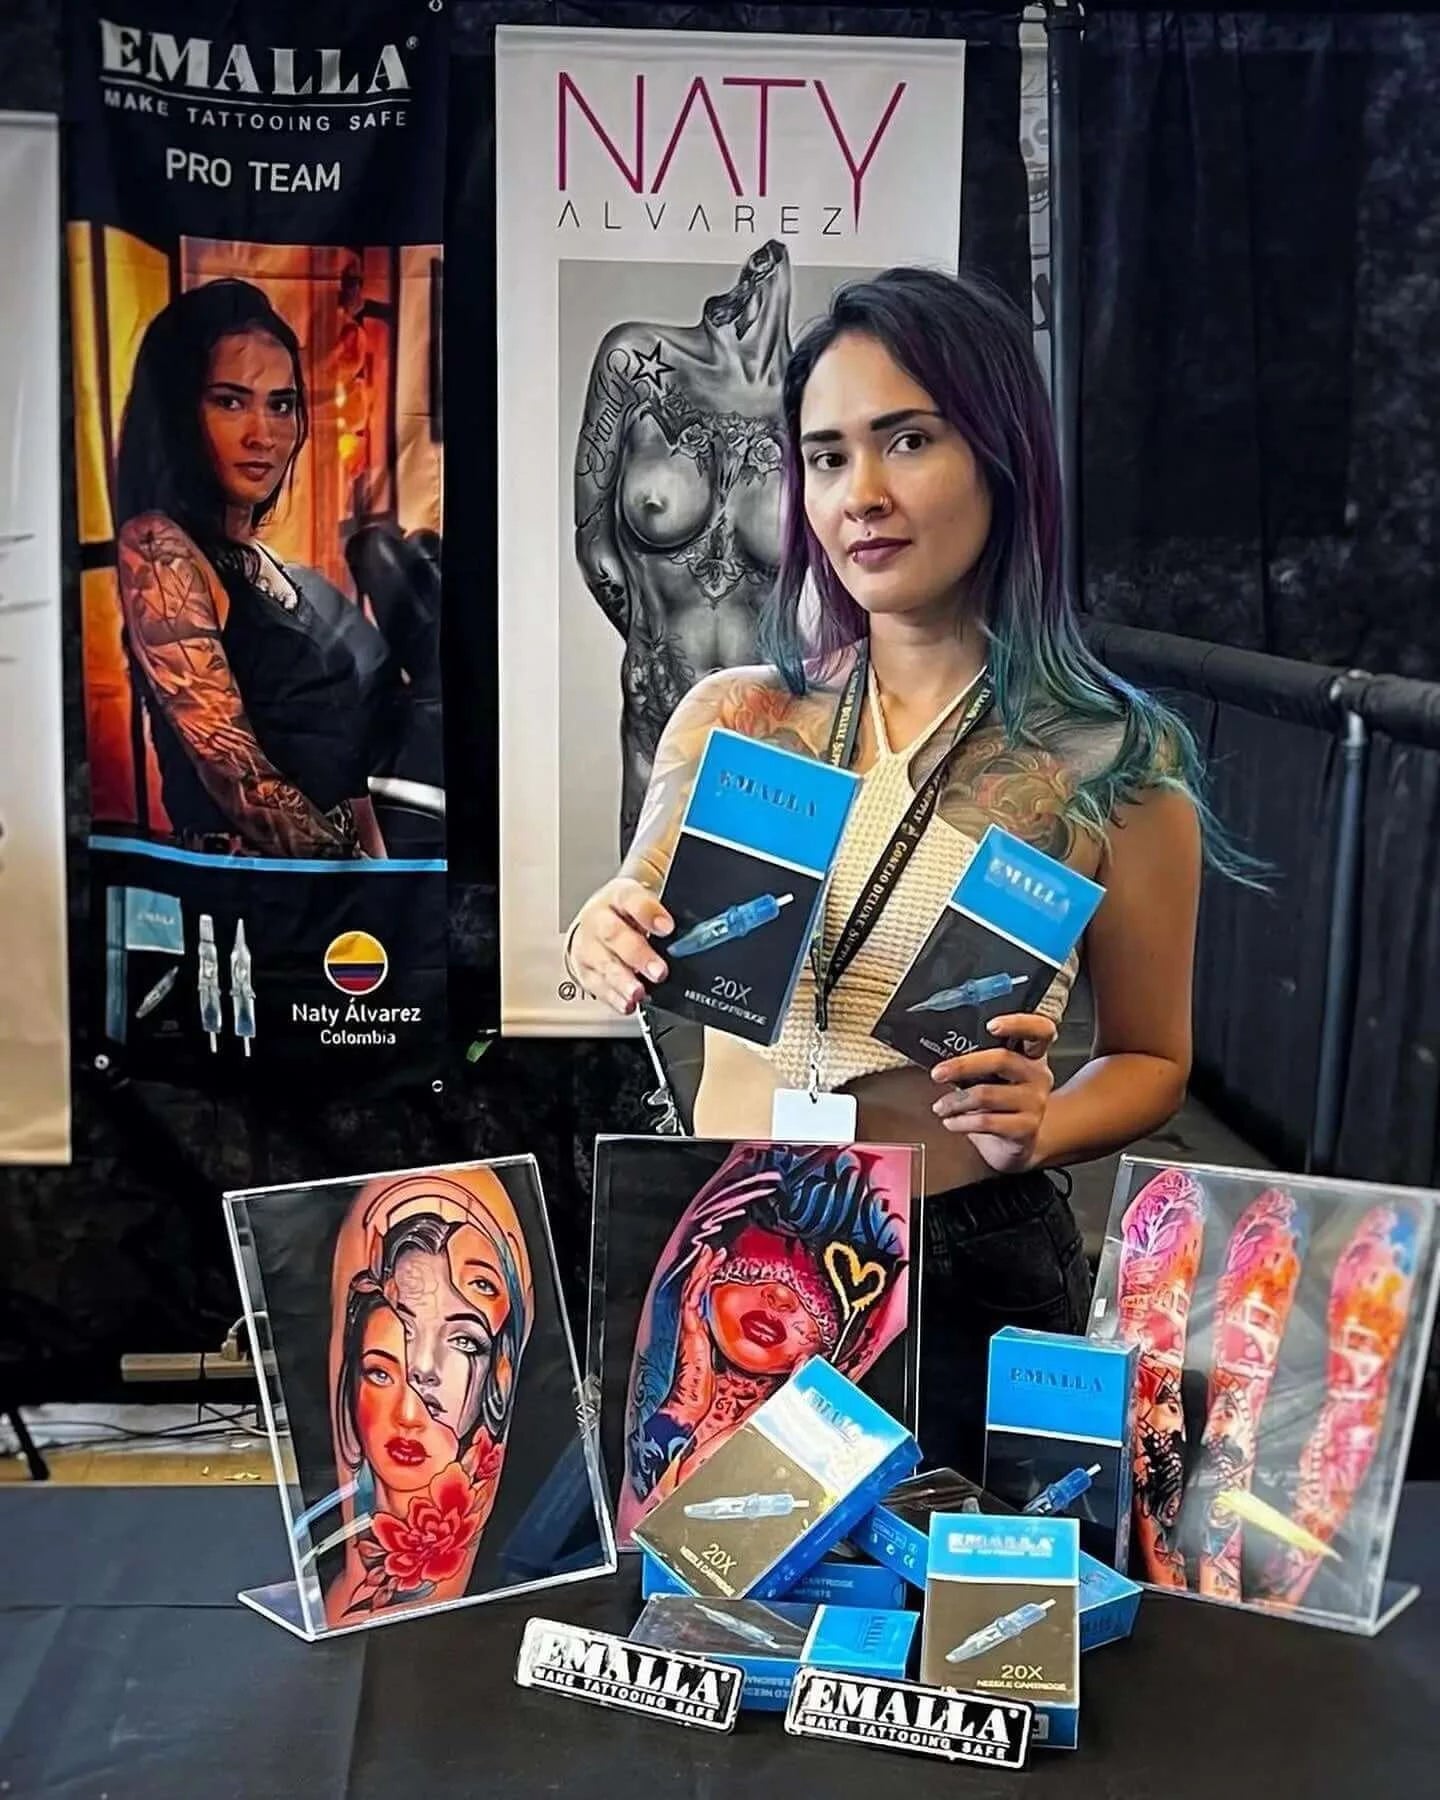 EMALLA-sponsored artist Naty Alvarez from Colombia poses with EMALLA cartridge needles